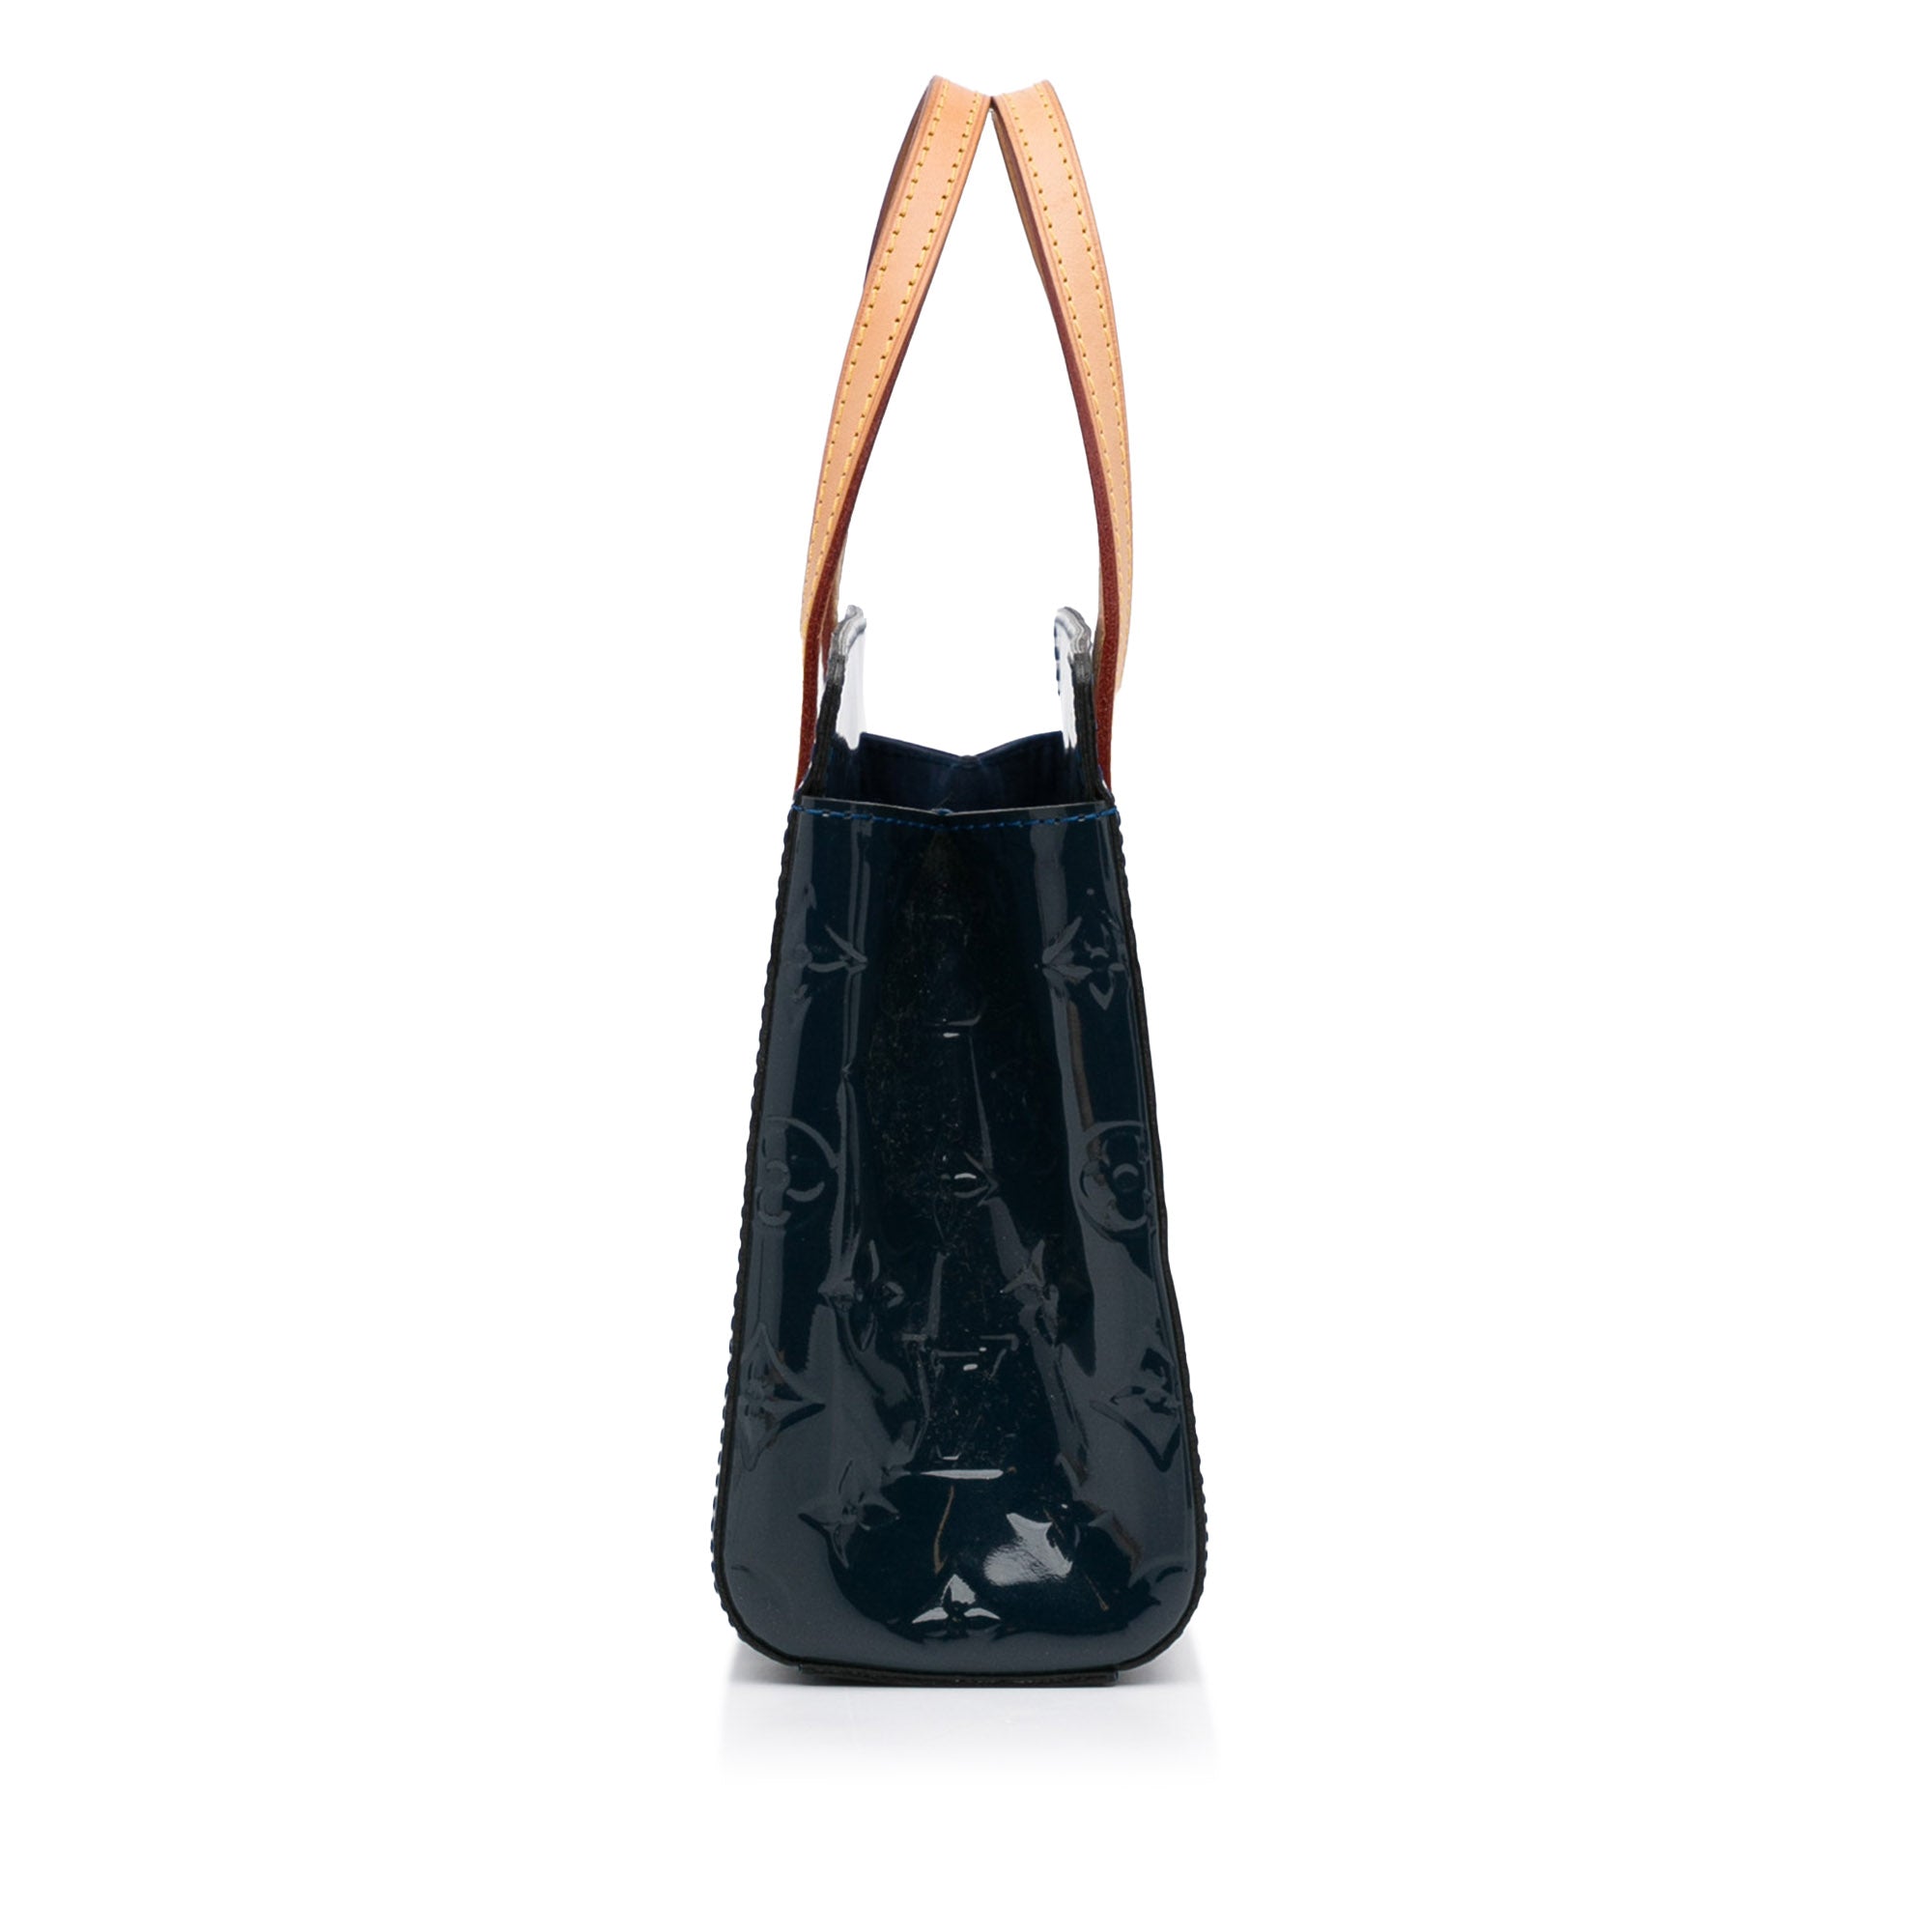 Louis Vuitton Amarante Monogram Vernis Brentwood Tote Bag at